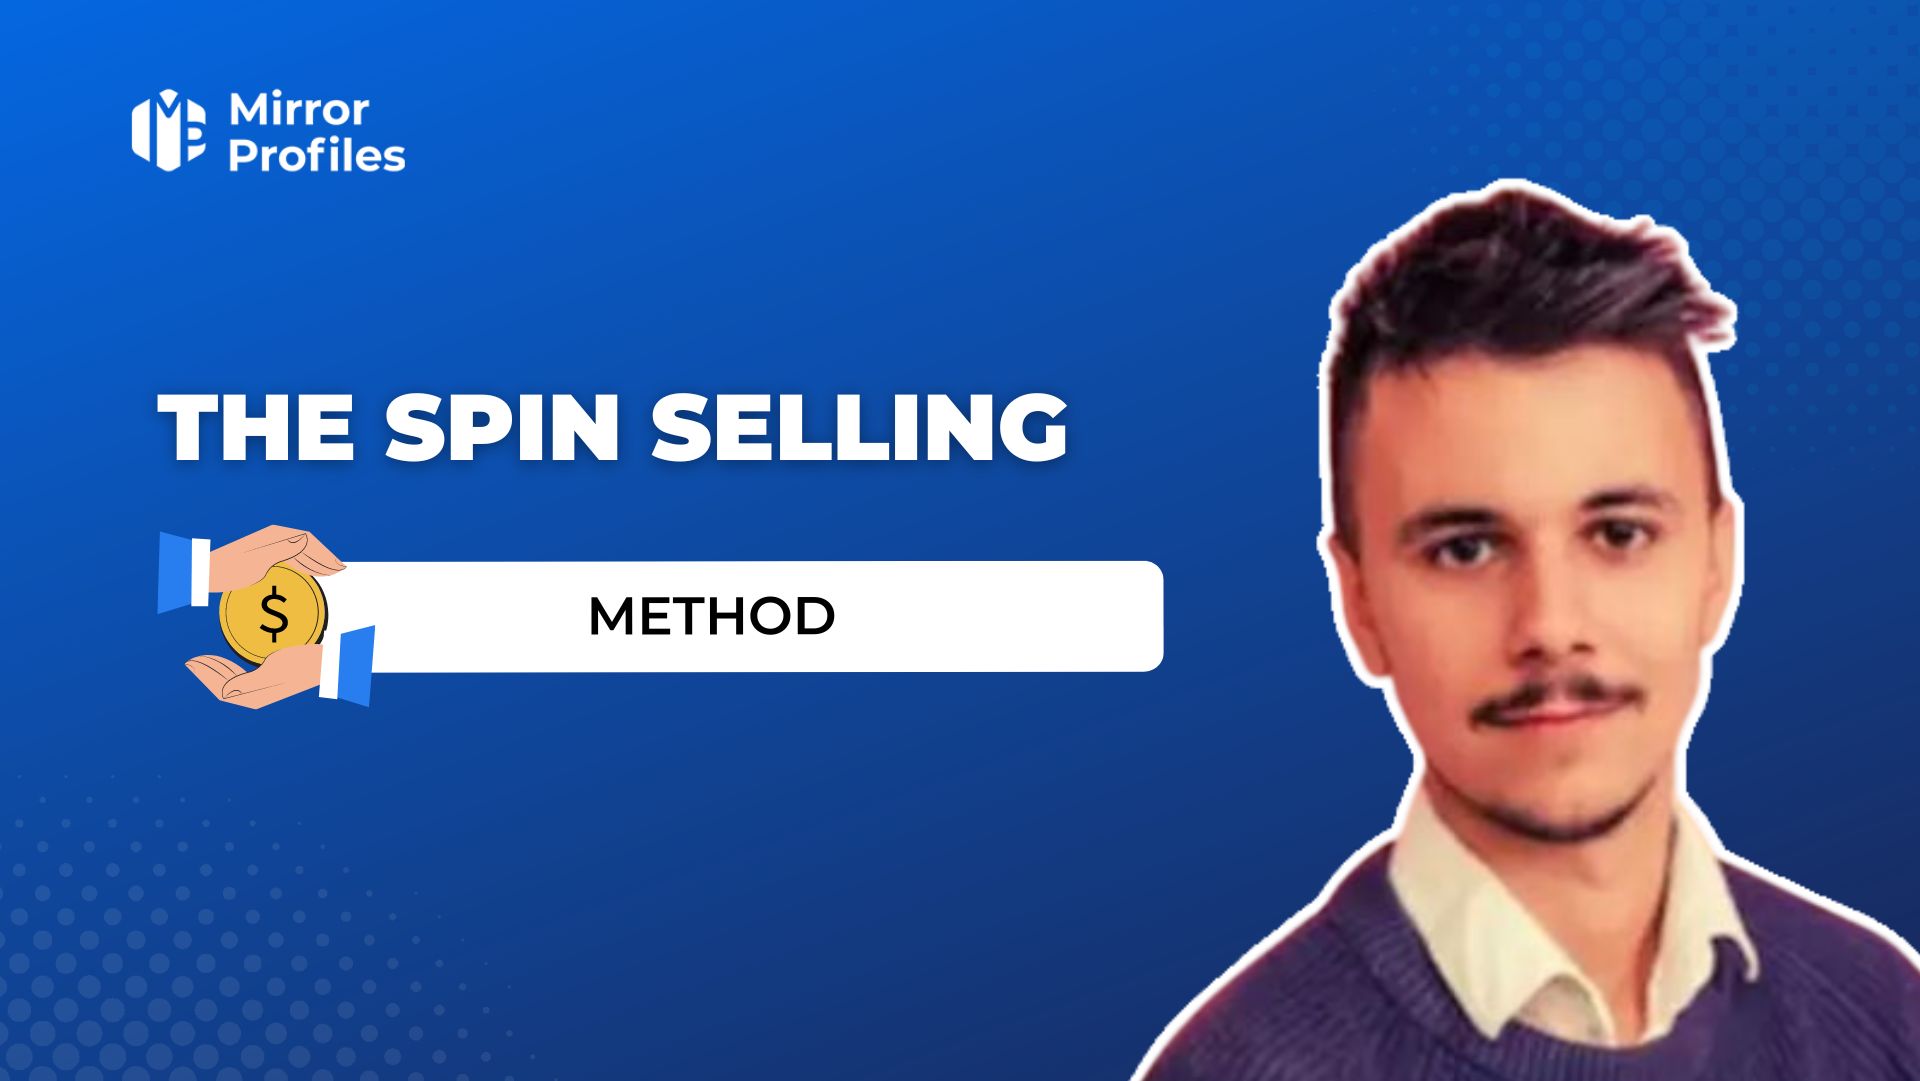 The speed selling method